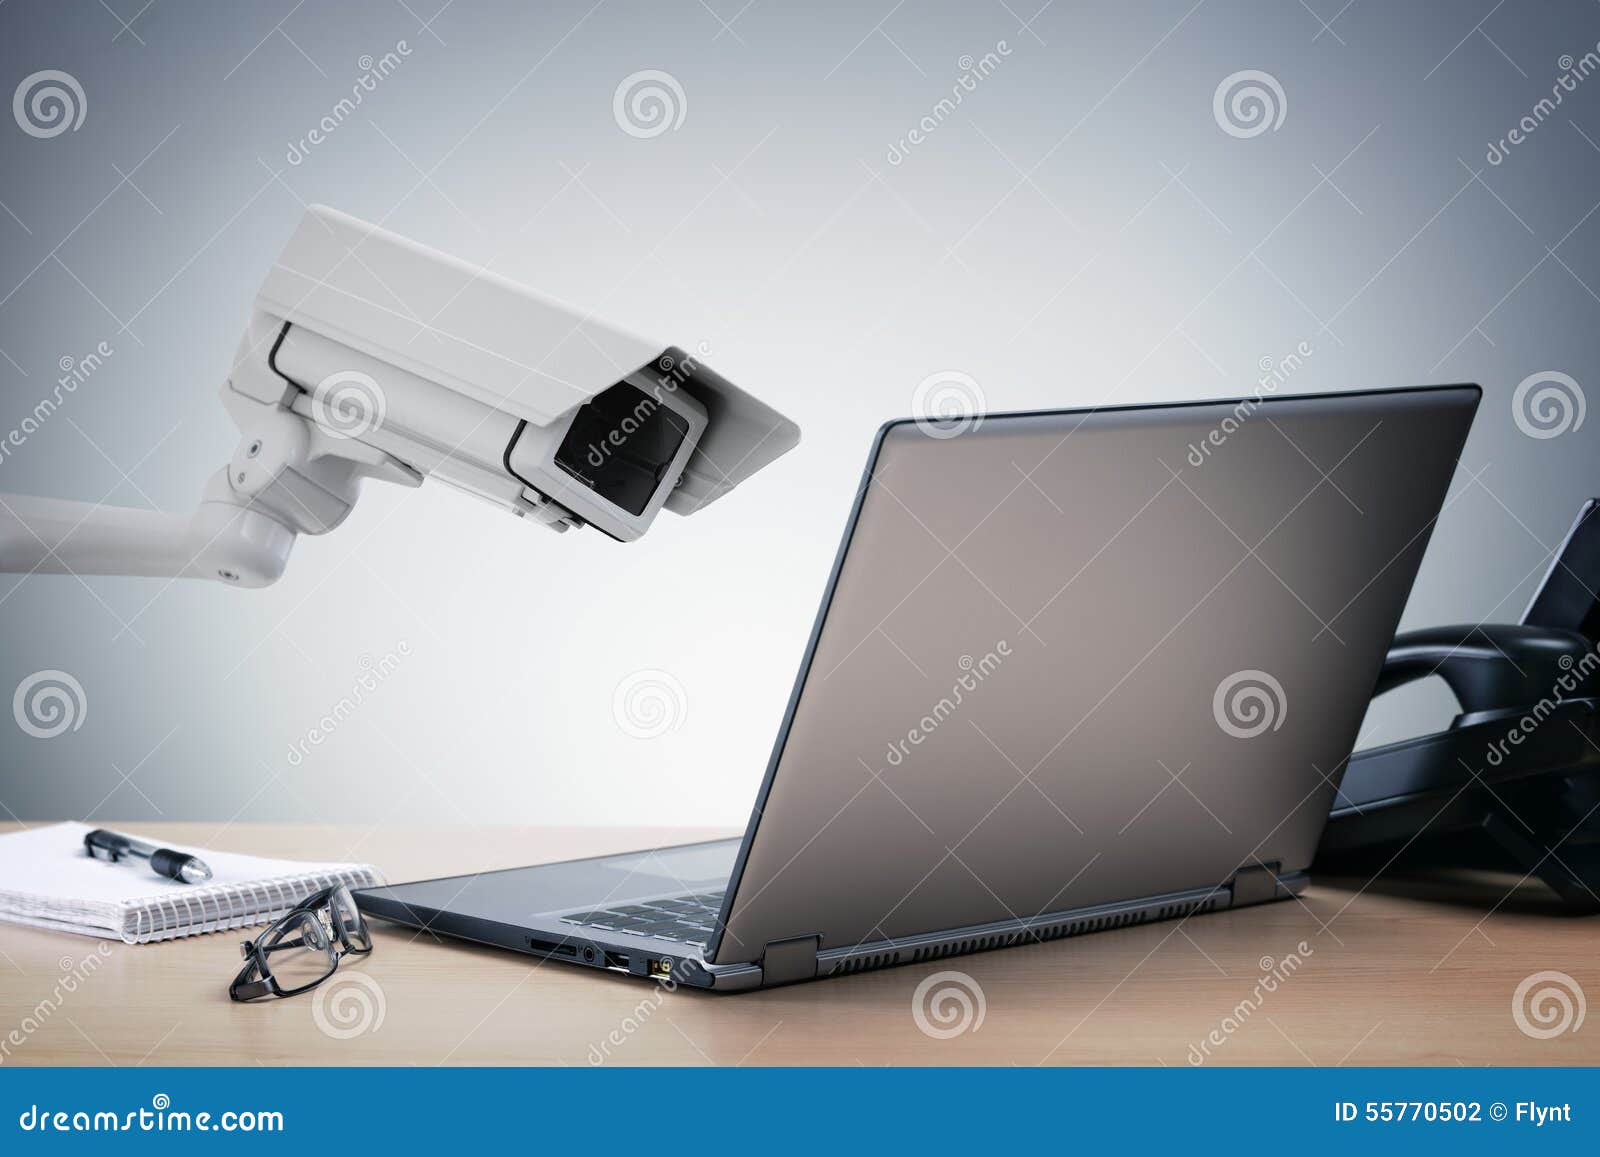 big brother surveillance